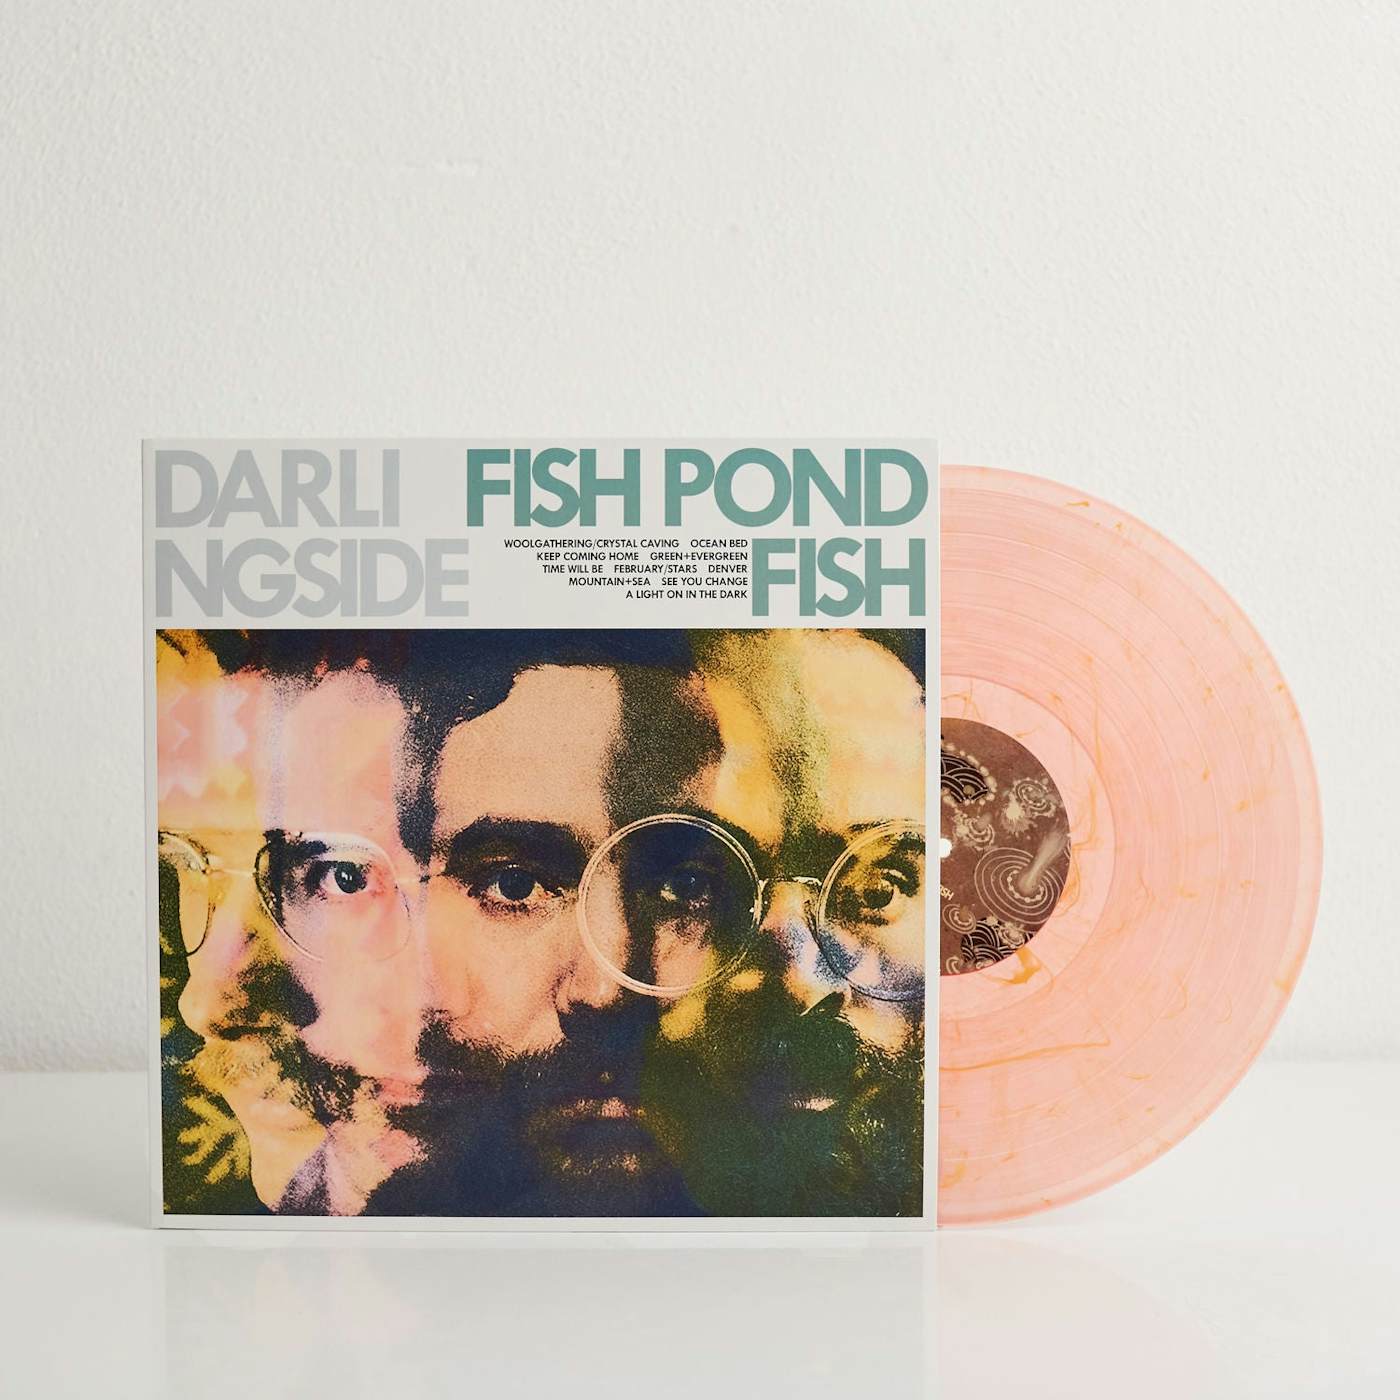 Darlingside Fish Pond Fish (Ltd. Edition LP) (Vinyl)